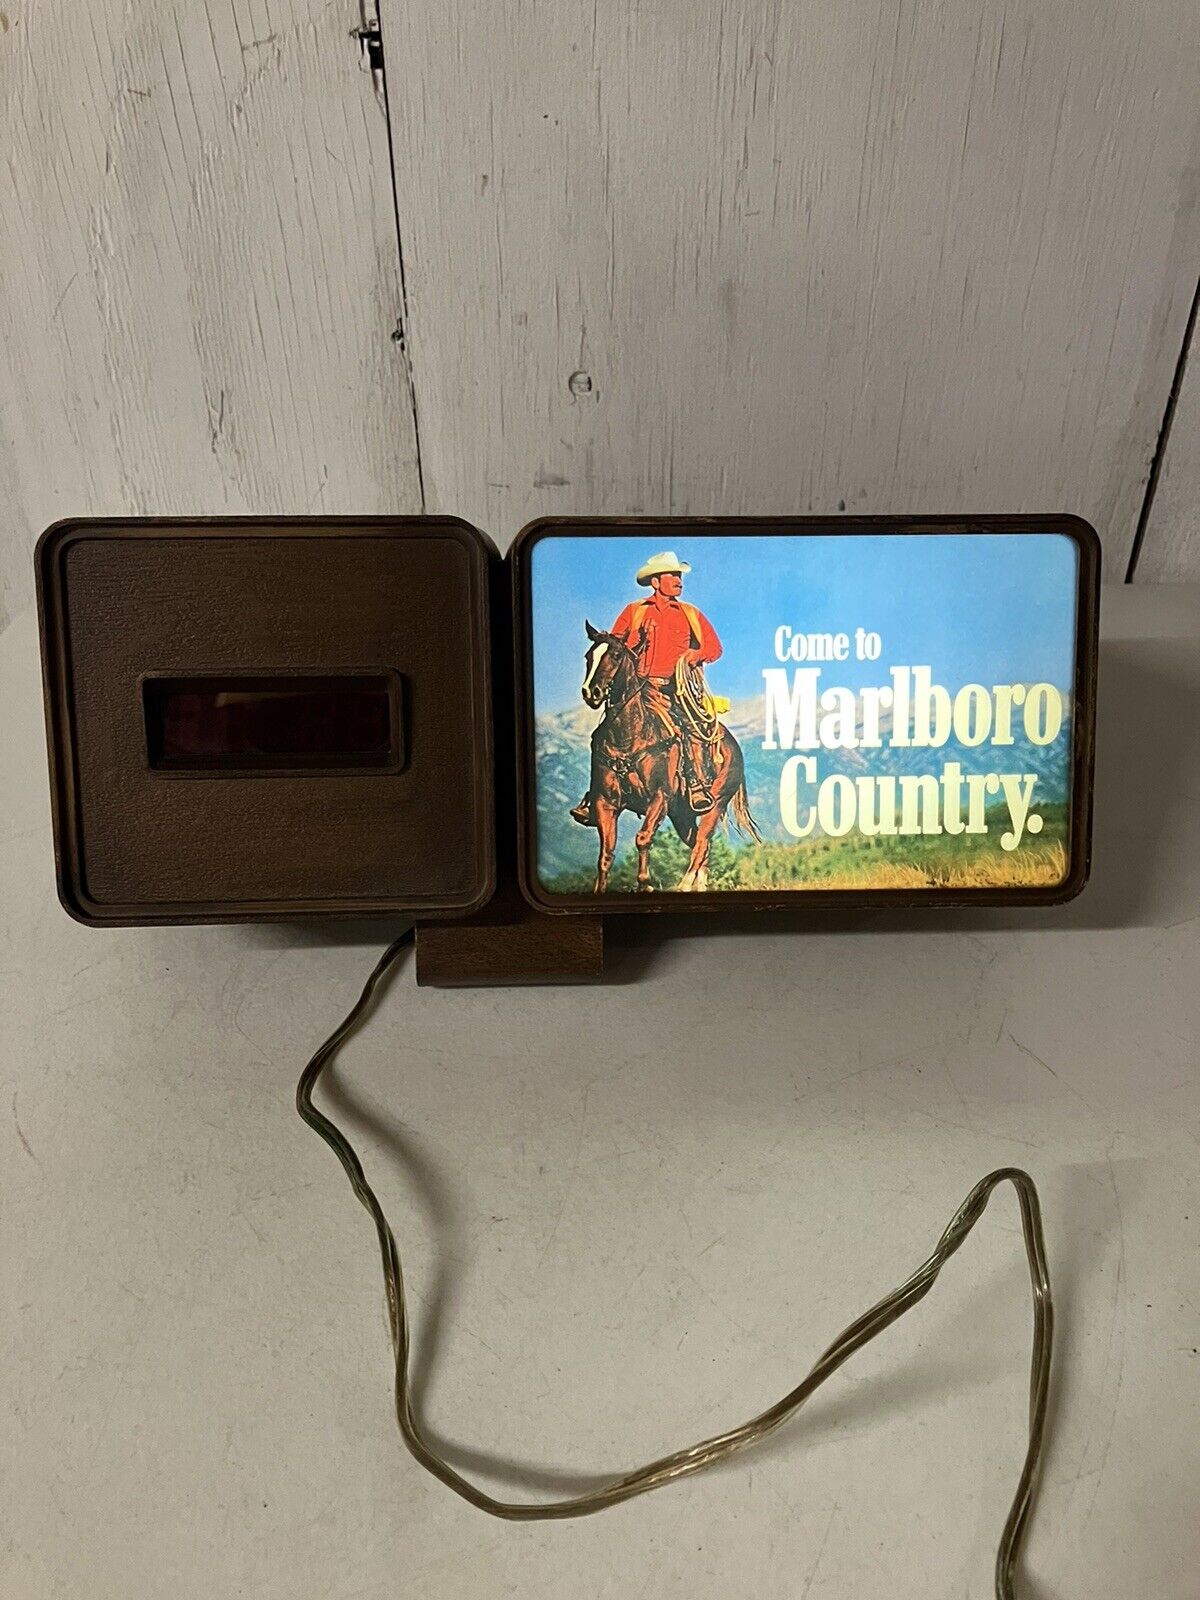 Marlboro Country Marlboro Man Light & Digital Clock Sign - Clock Doesn’t Work